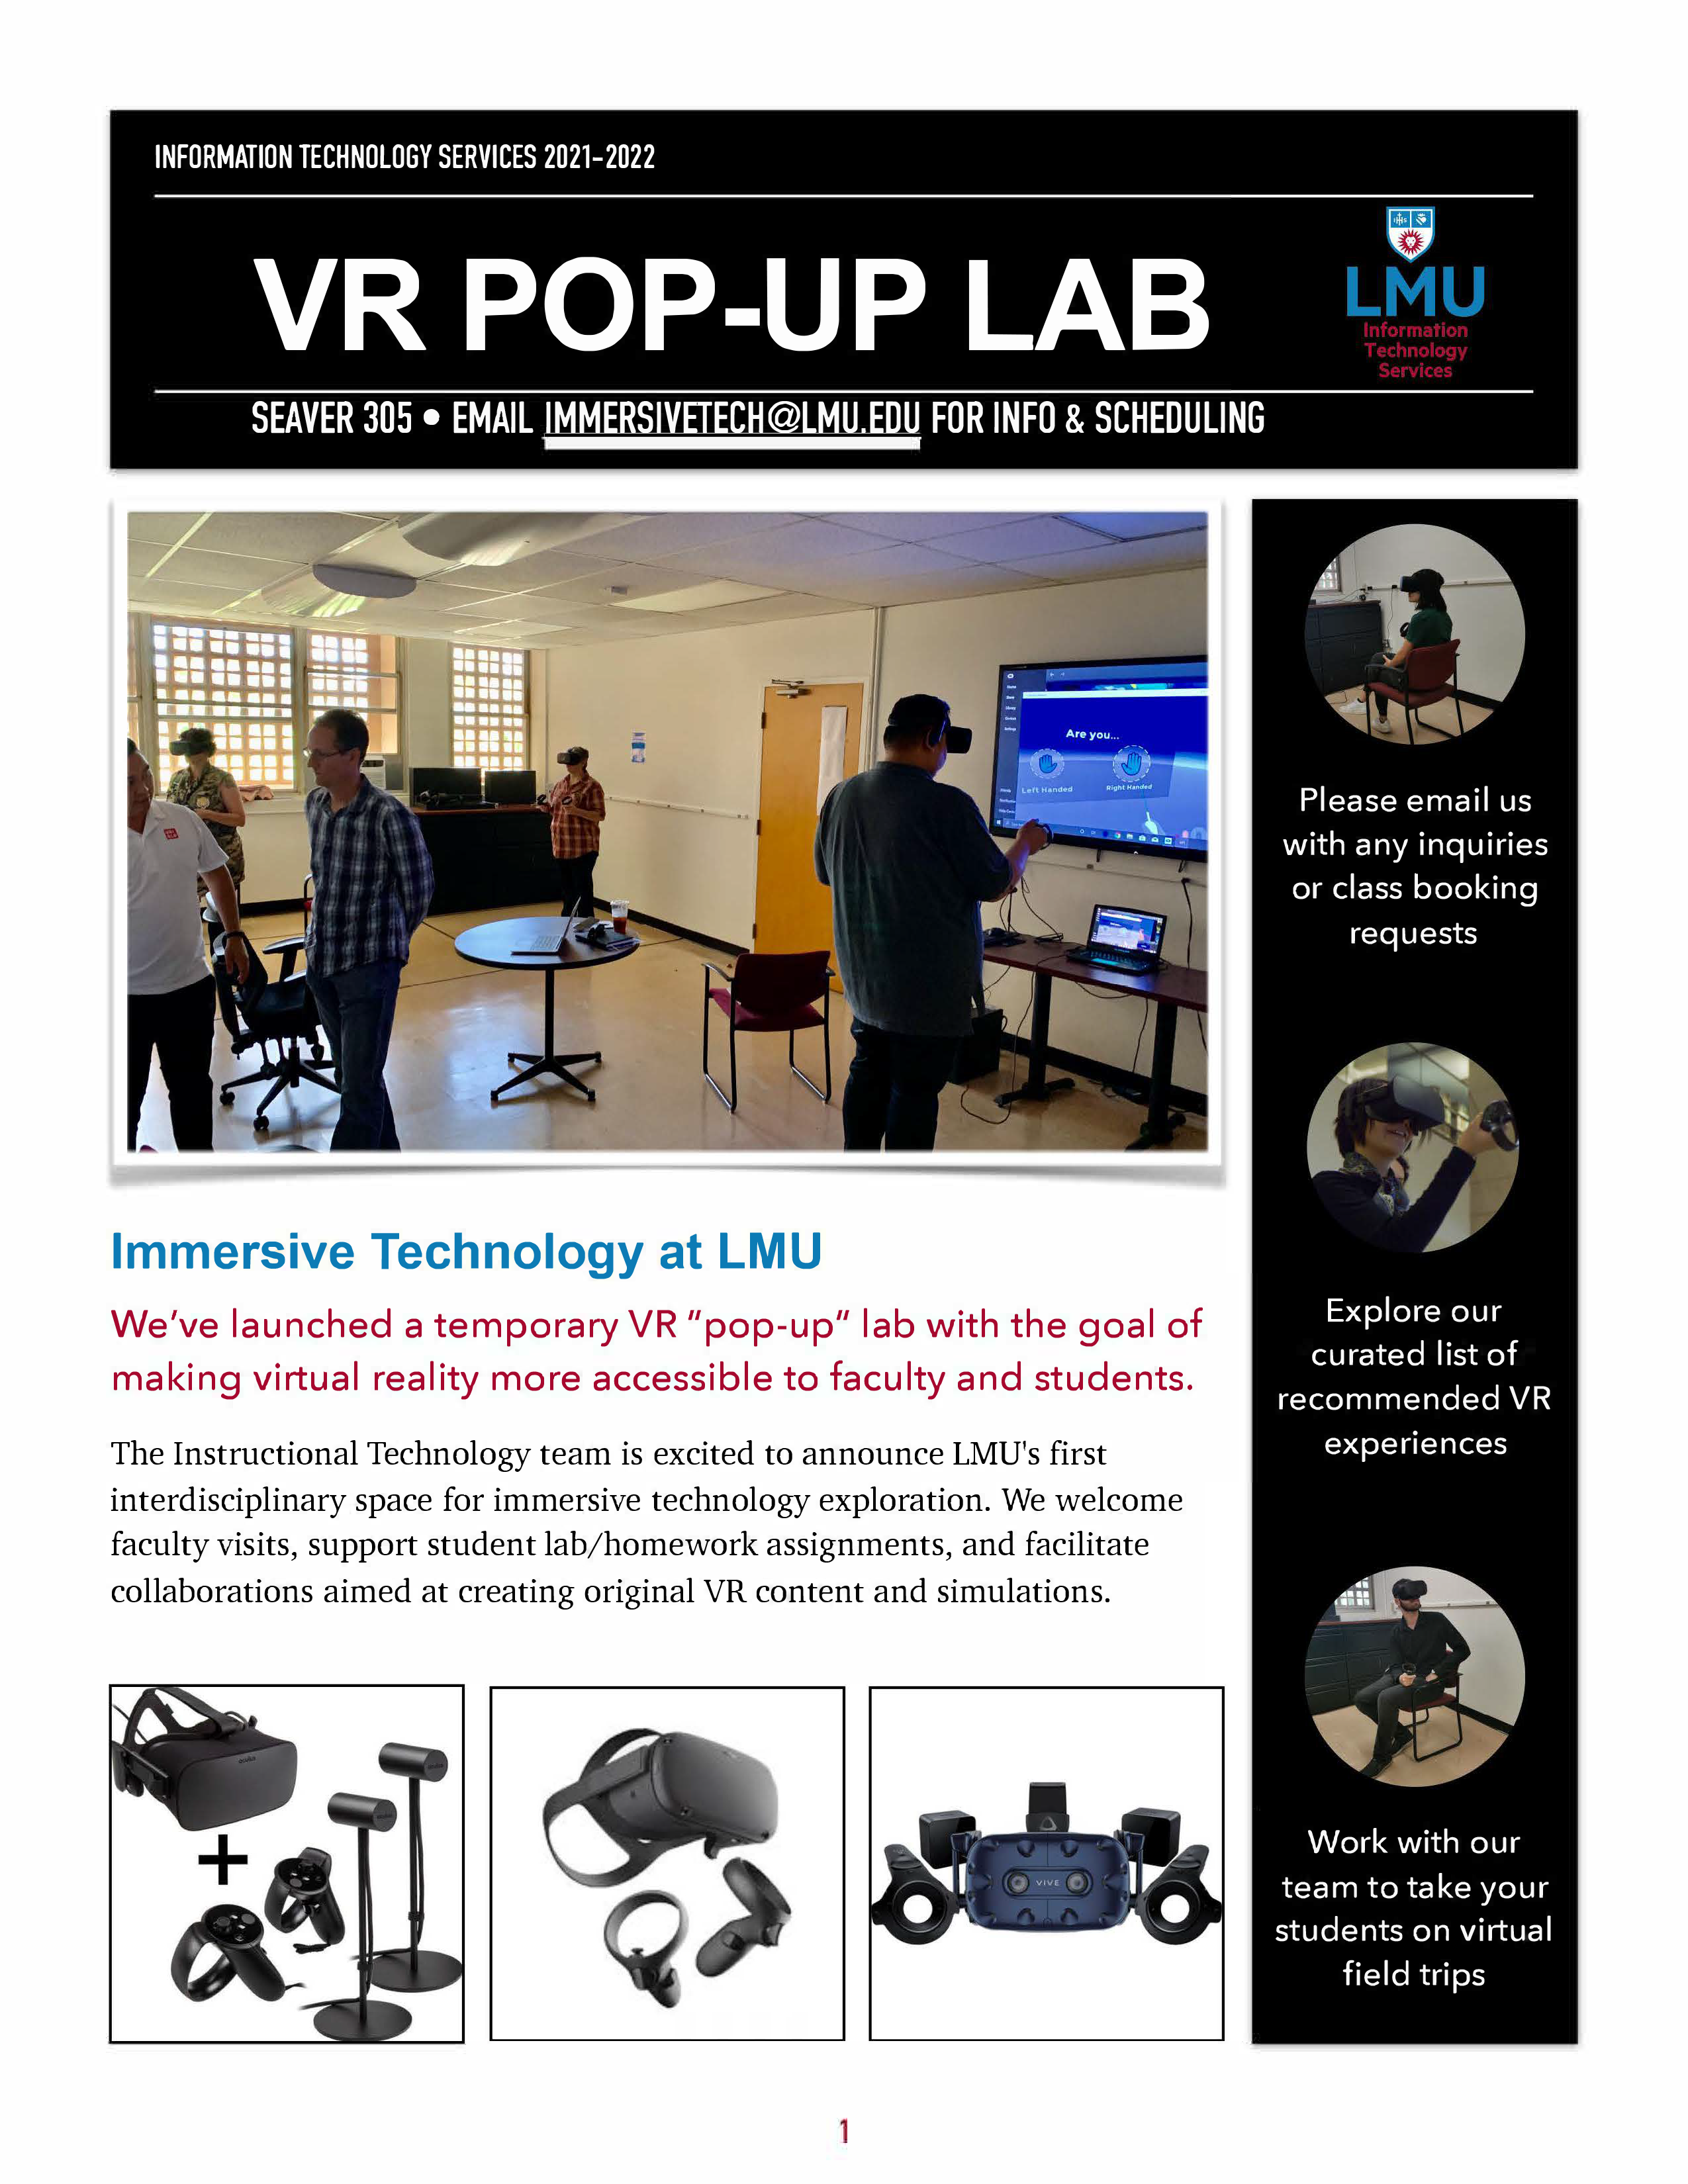 LMU VR Lab Image 1